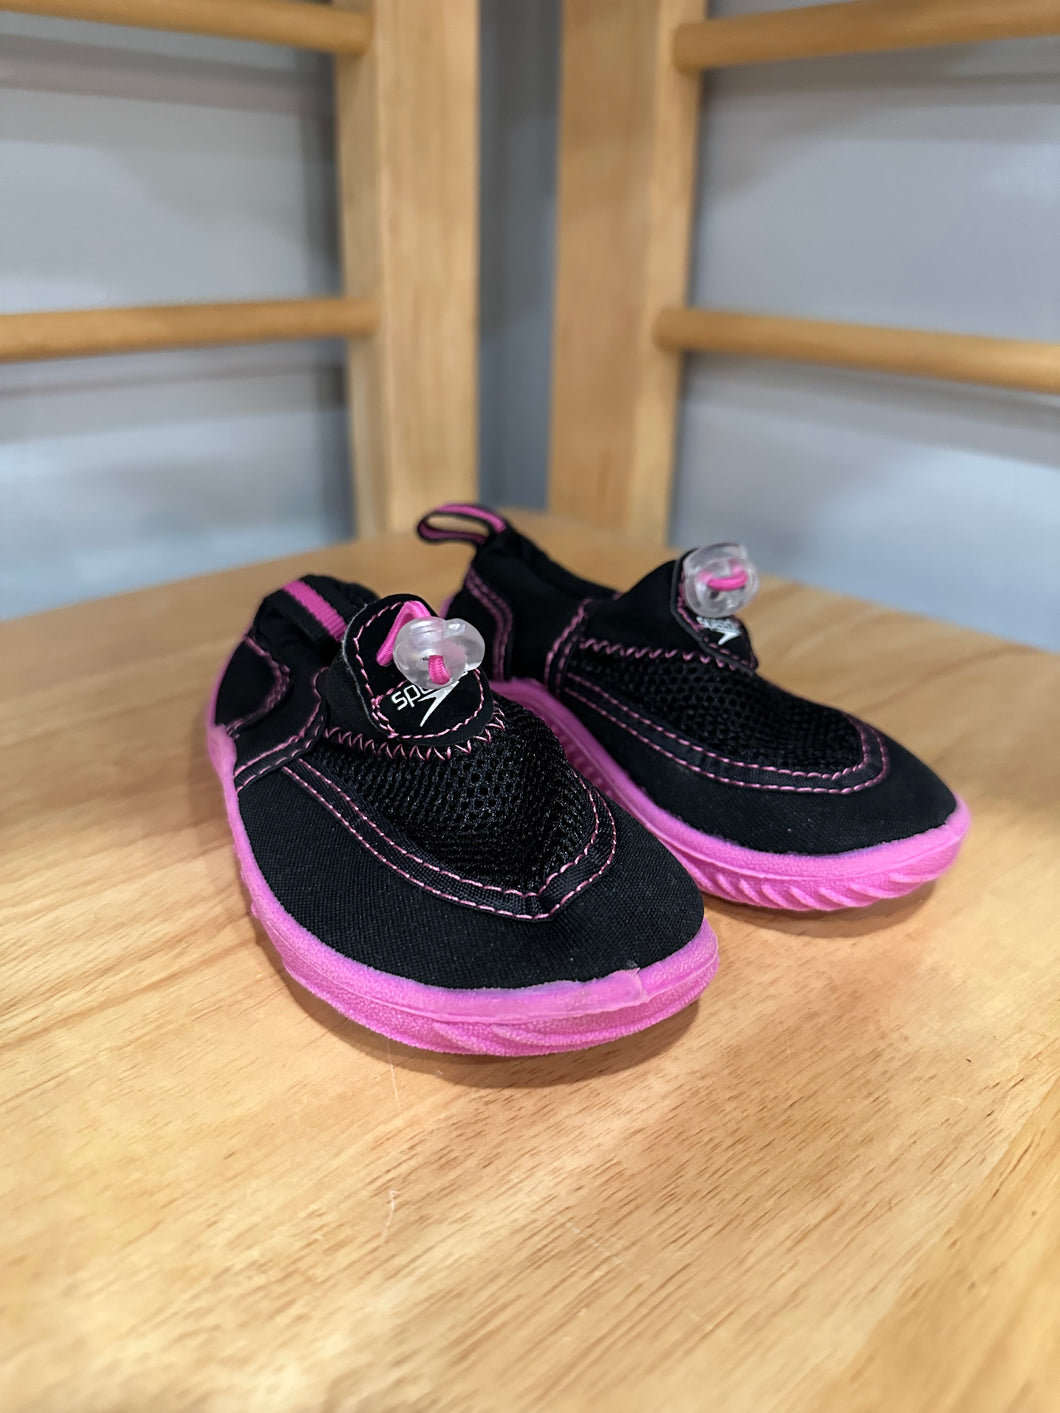 Speedo Pink & Black Water Shoes Size 5/6